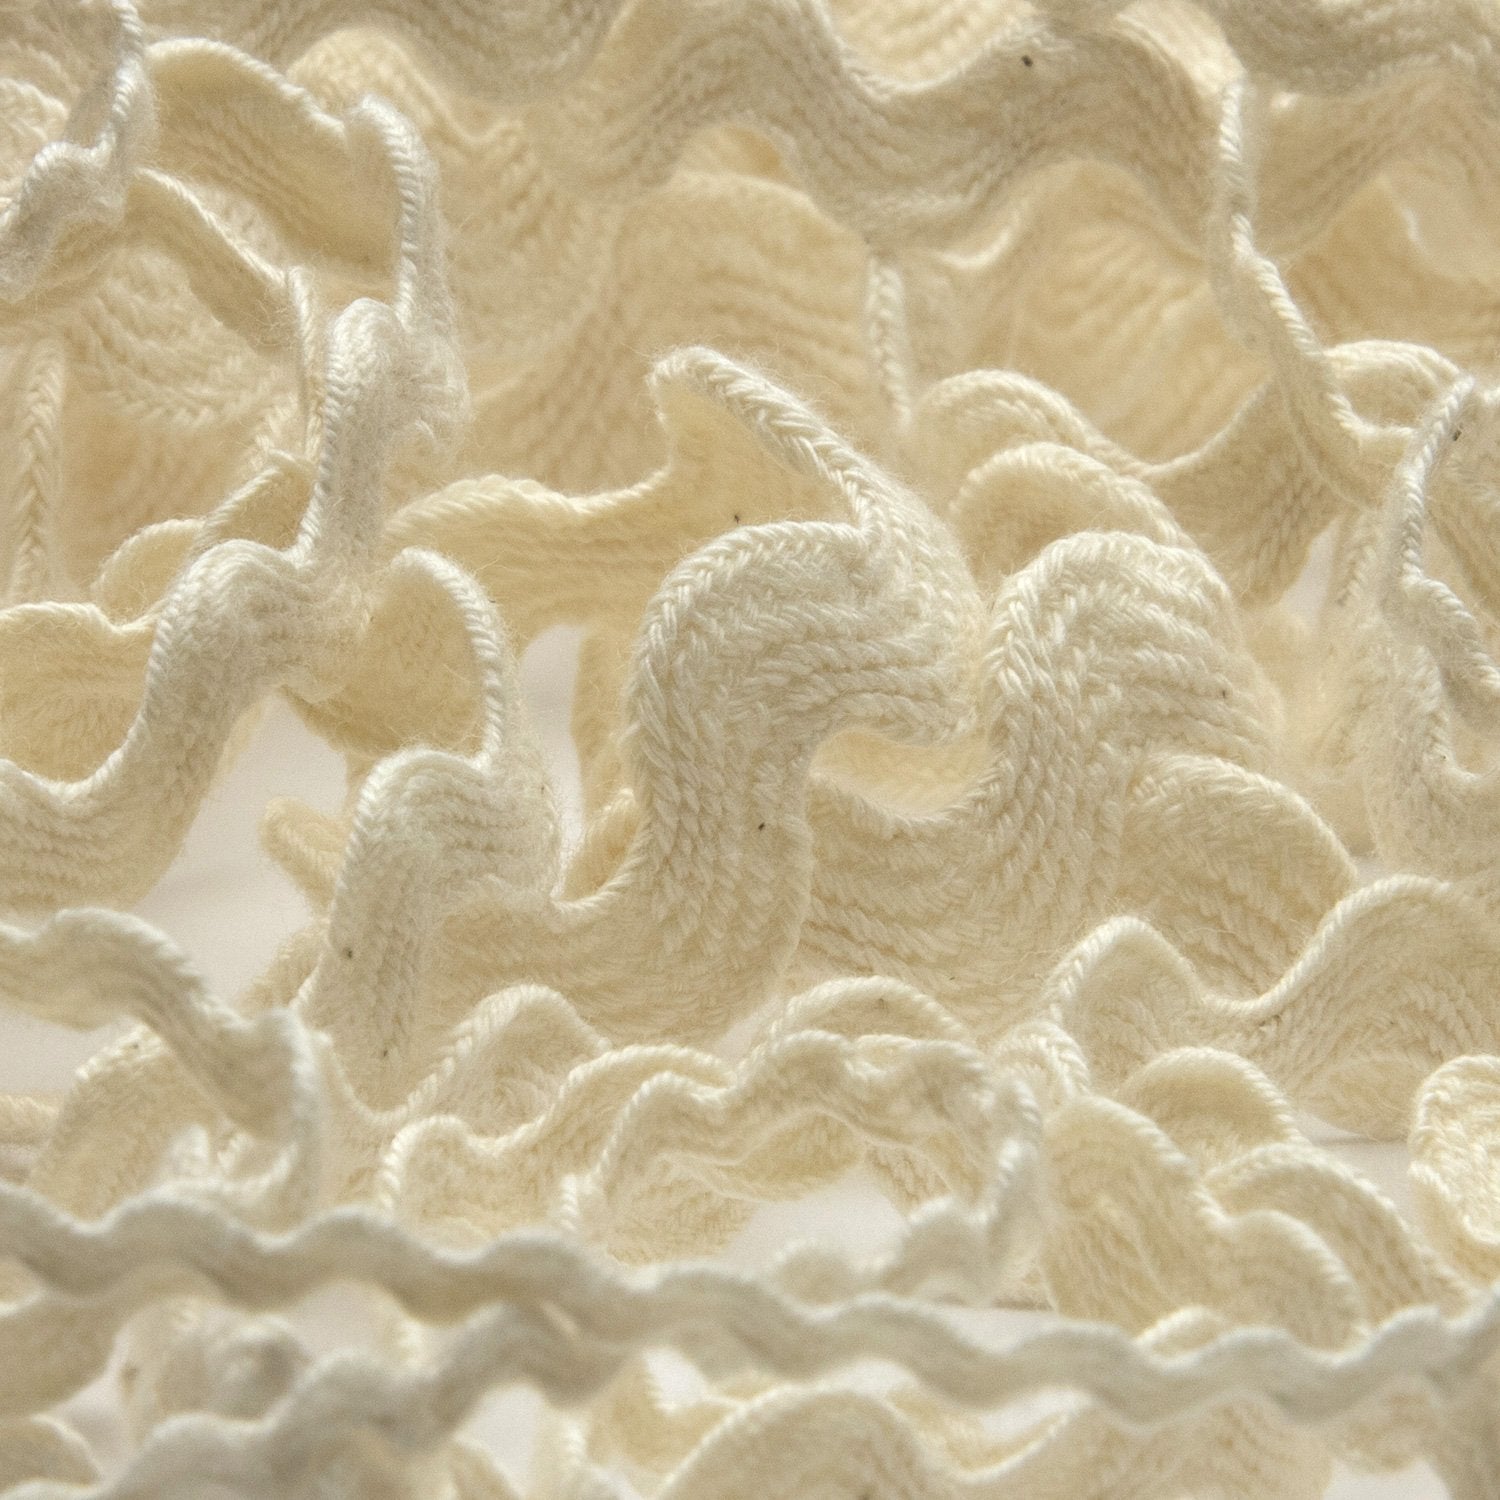 FUJIYAMA RIBBON [Wholesale] Organic Cotton Zig-Zag Tape approx.14mm Ecru 30 Meters Roll